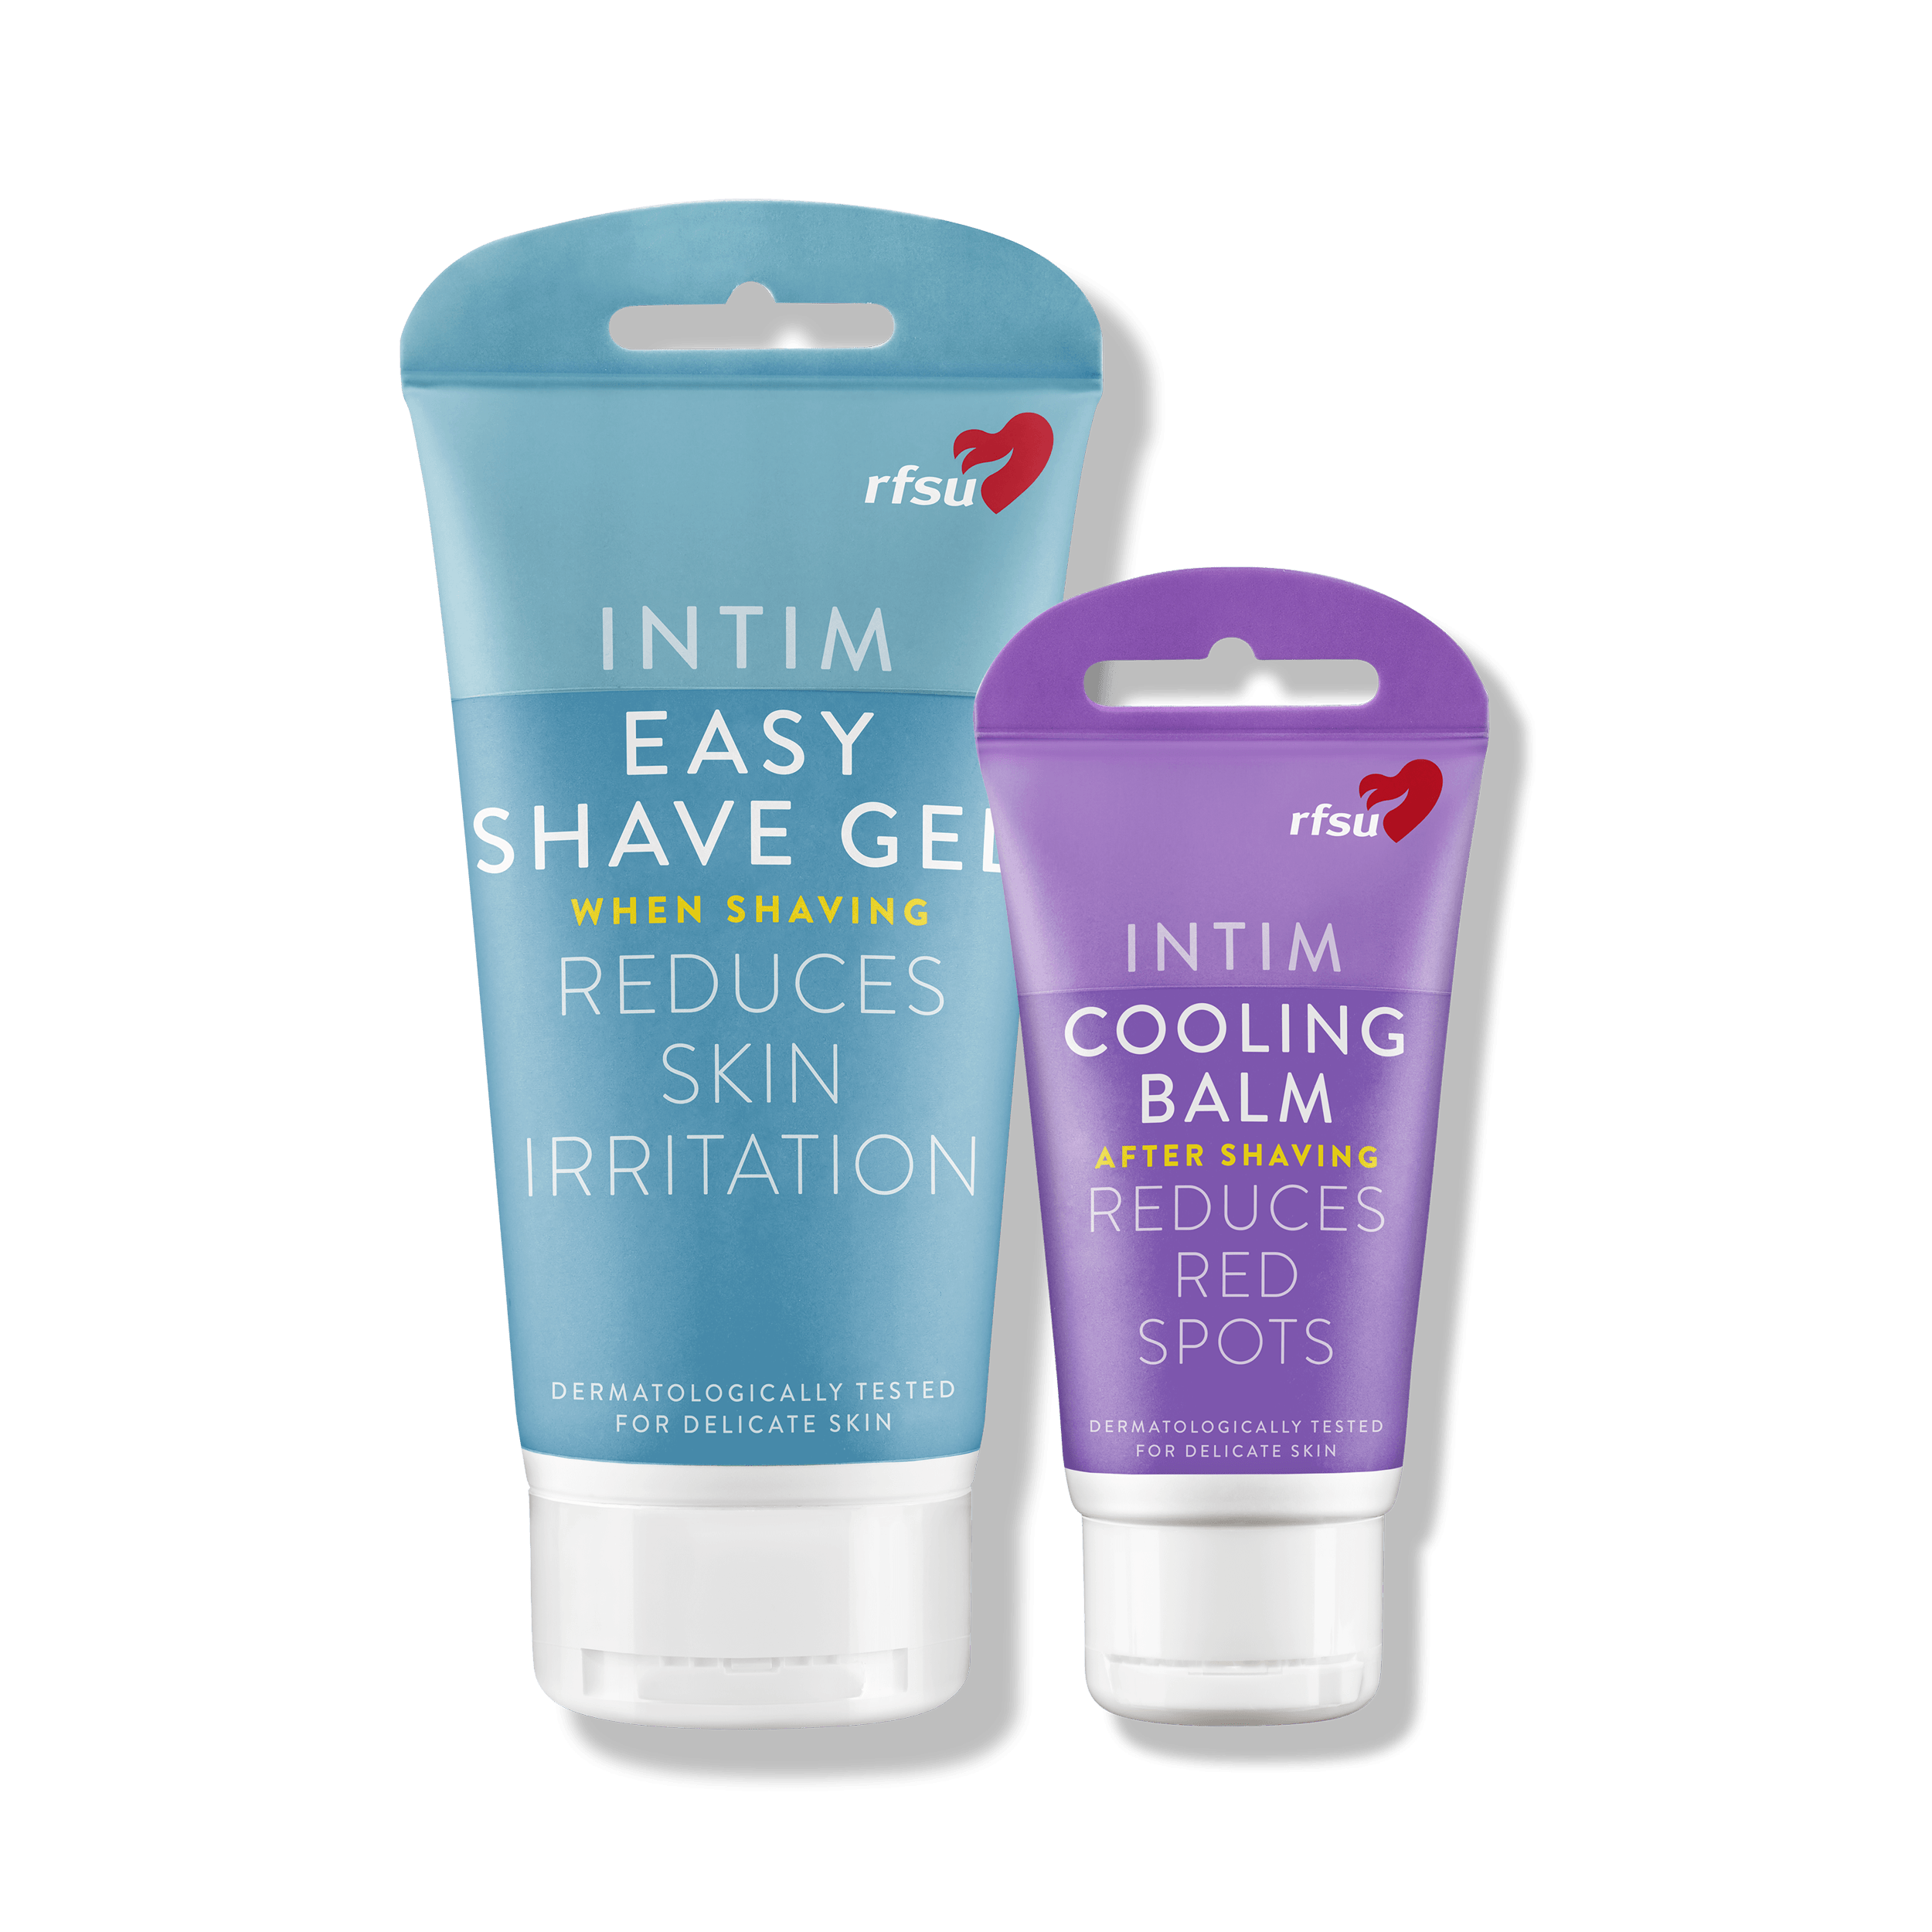 Intim Easy Shave Gel & Intim Cooling Balm